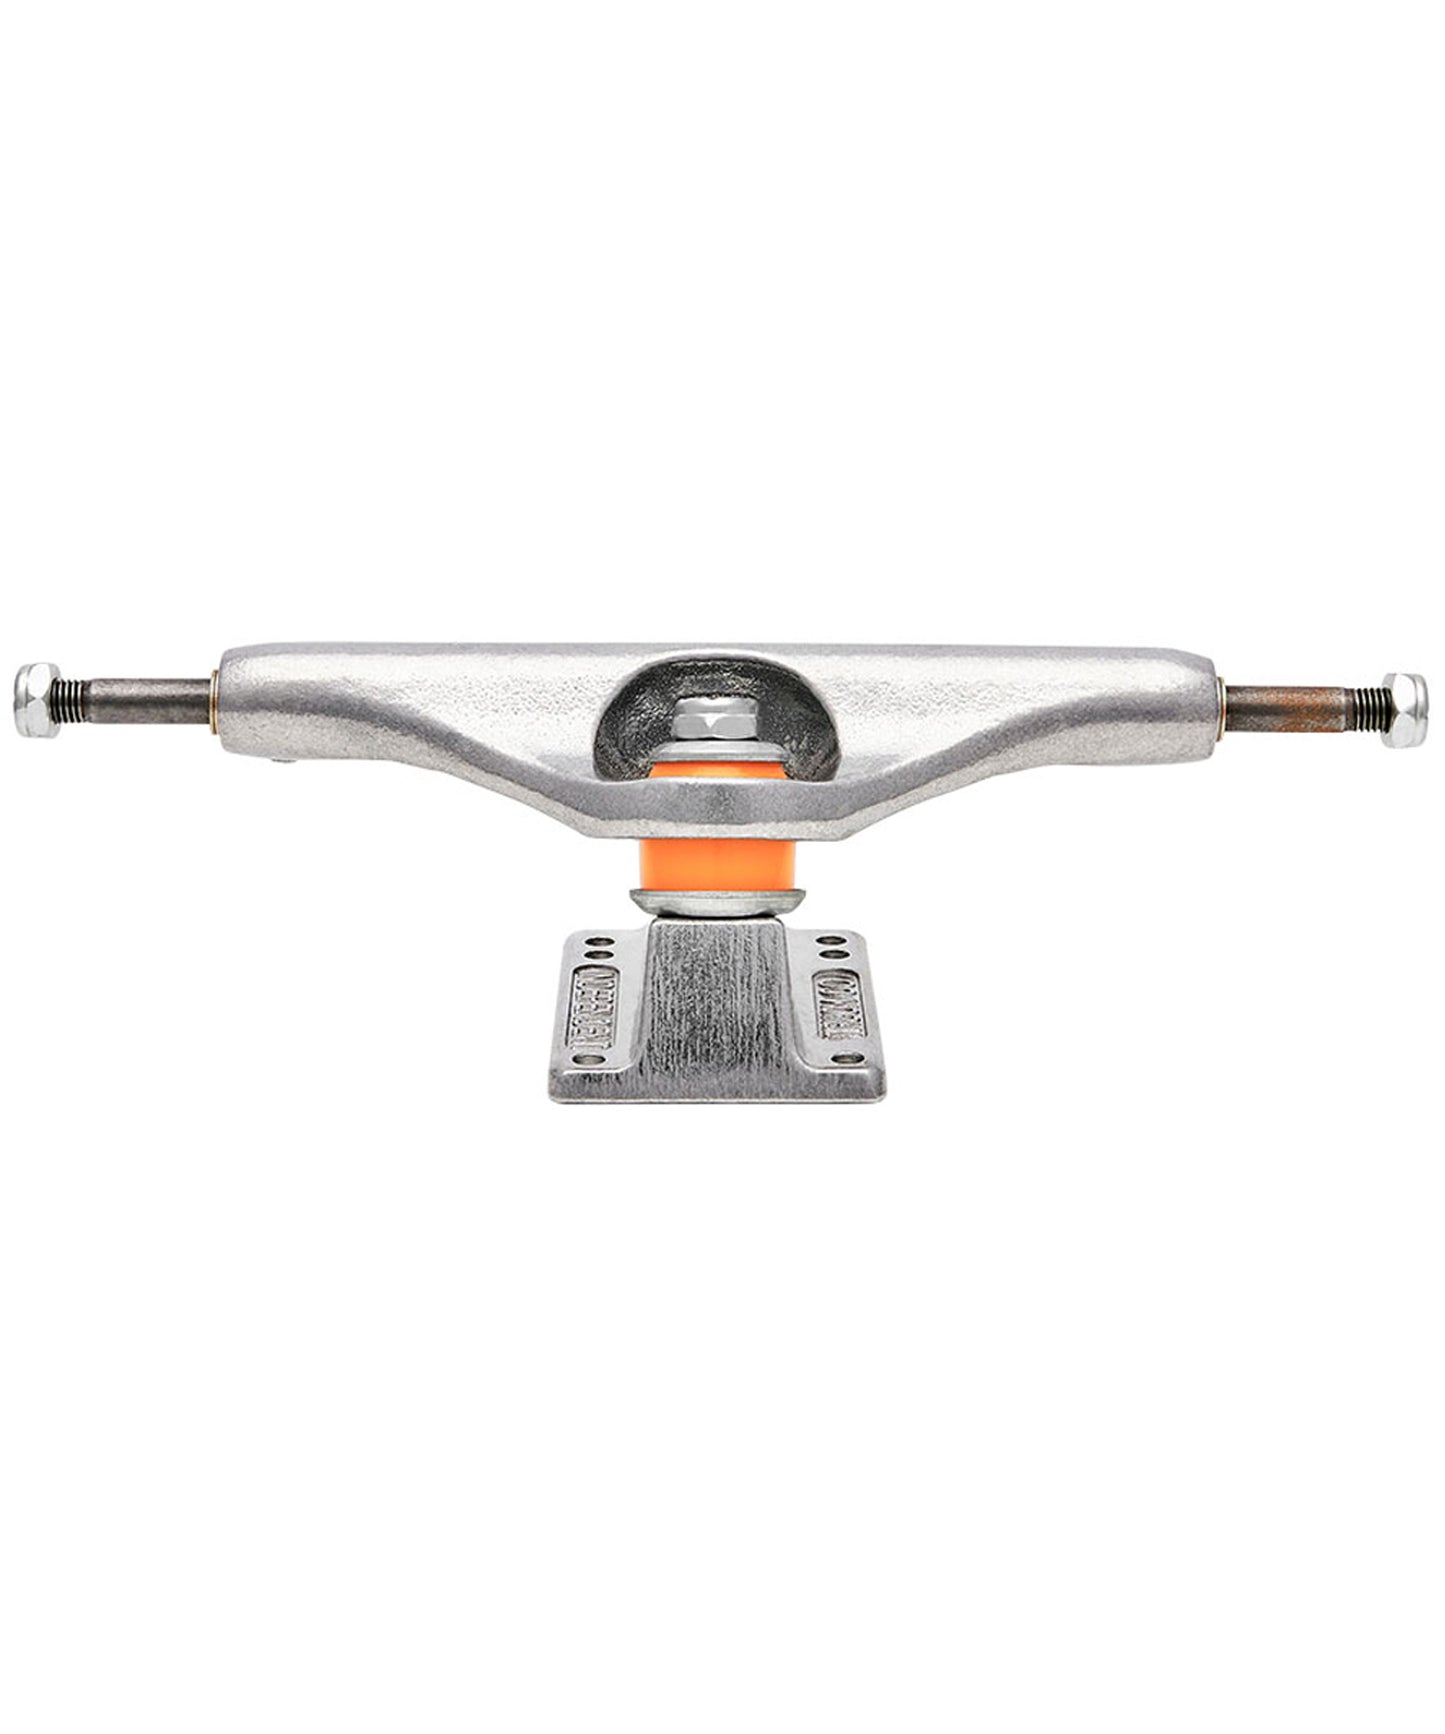 independent-standard-polished-169-mm-ejes de calidad-para skate-hanger y placa base de aluminio-duraderos-independent-marca reputada en ejes.